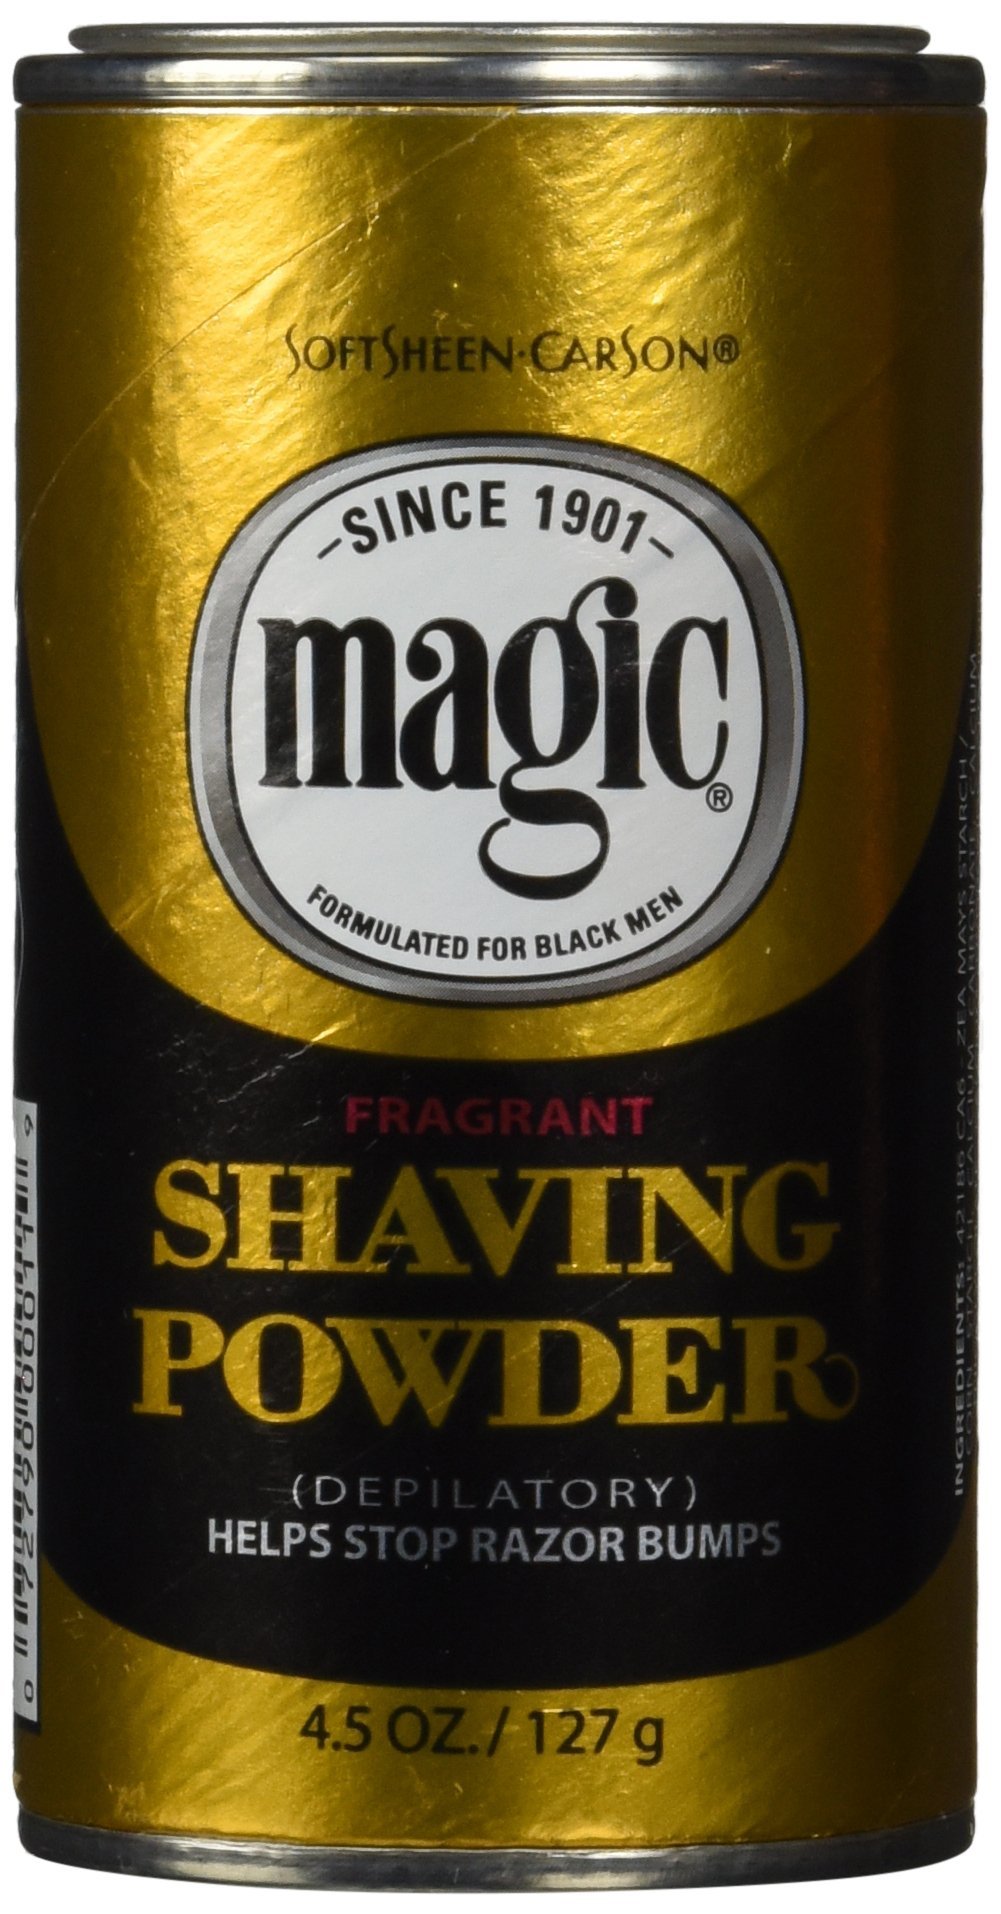 [Australia] - Softsheen-Carson Magic Razorless Shaving for Men, Magic Shaving Powder with Fragrance, Coarse Textured Beards, Formulated for Black Men, Depilatory, Helps Stop Razor Bumps, Since 1901, 4.5 oz Fragrant 